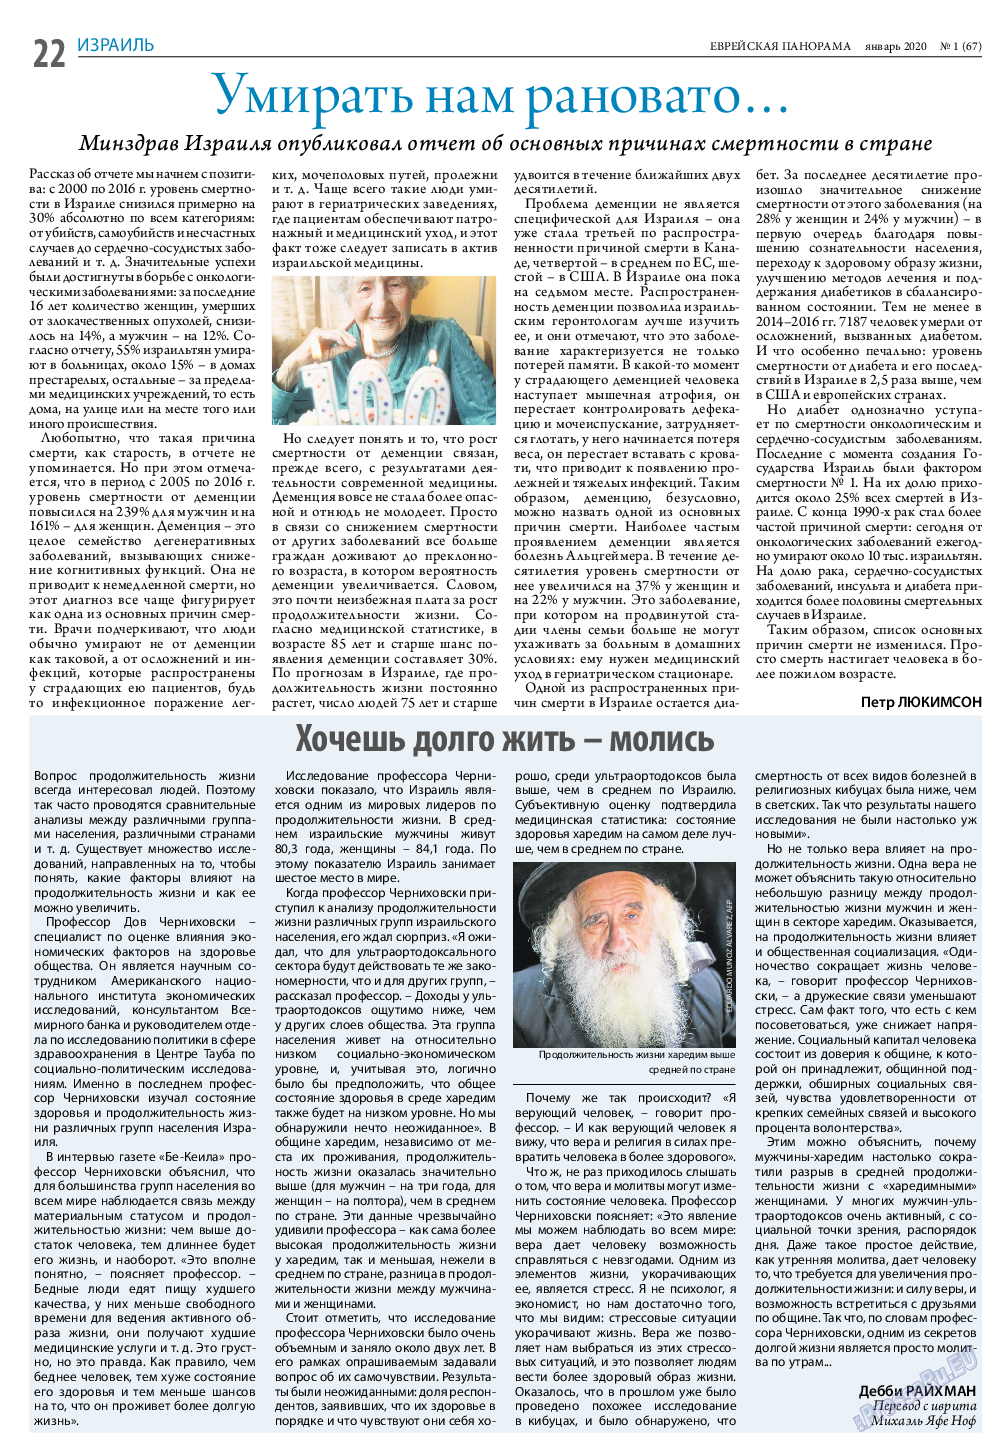 Еврейская панорама, газета. 2020 №1 стр.22